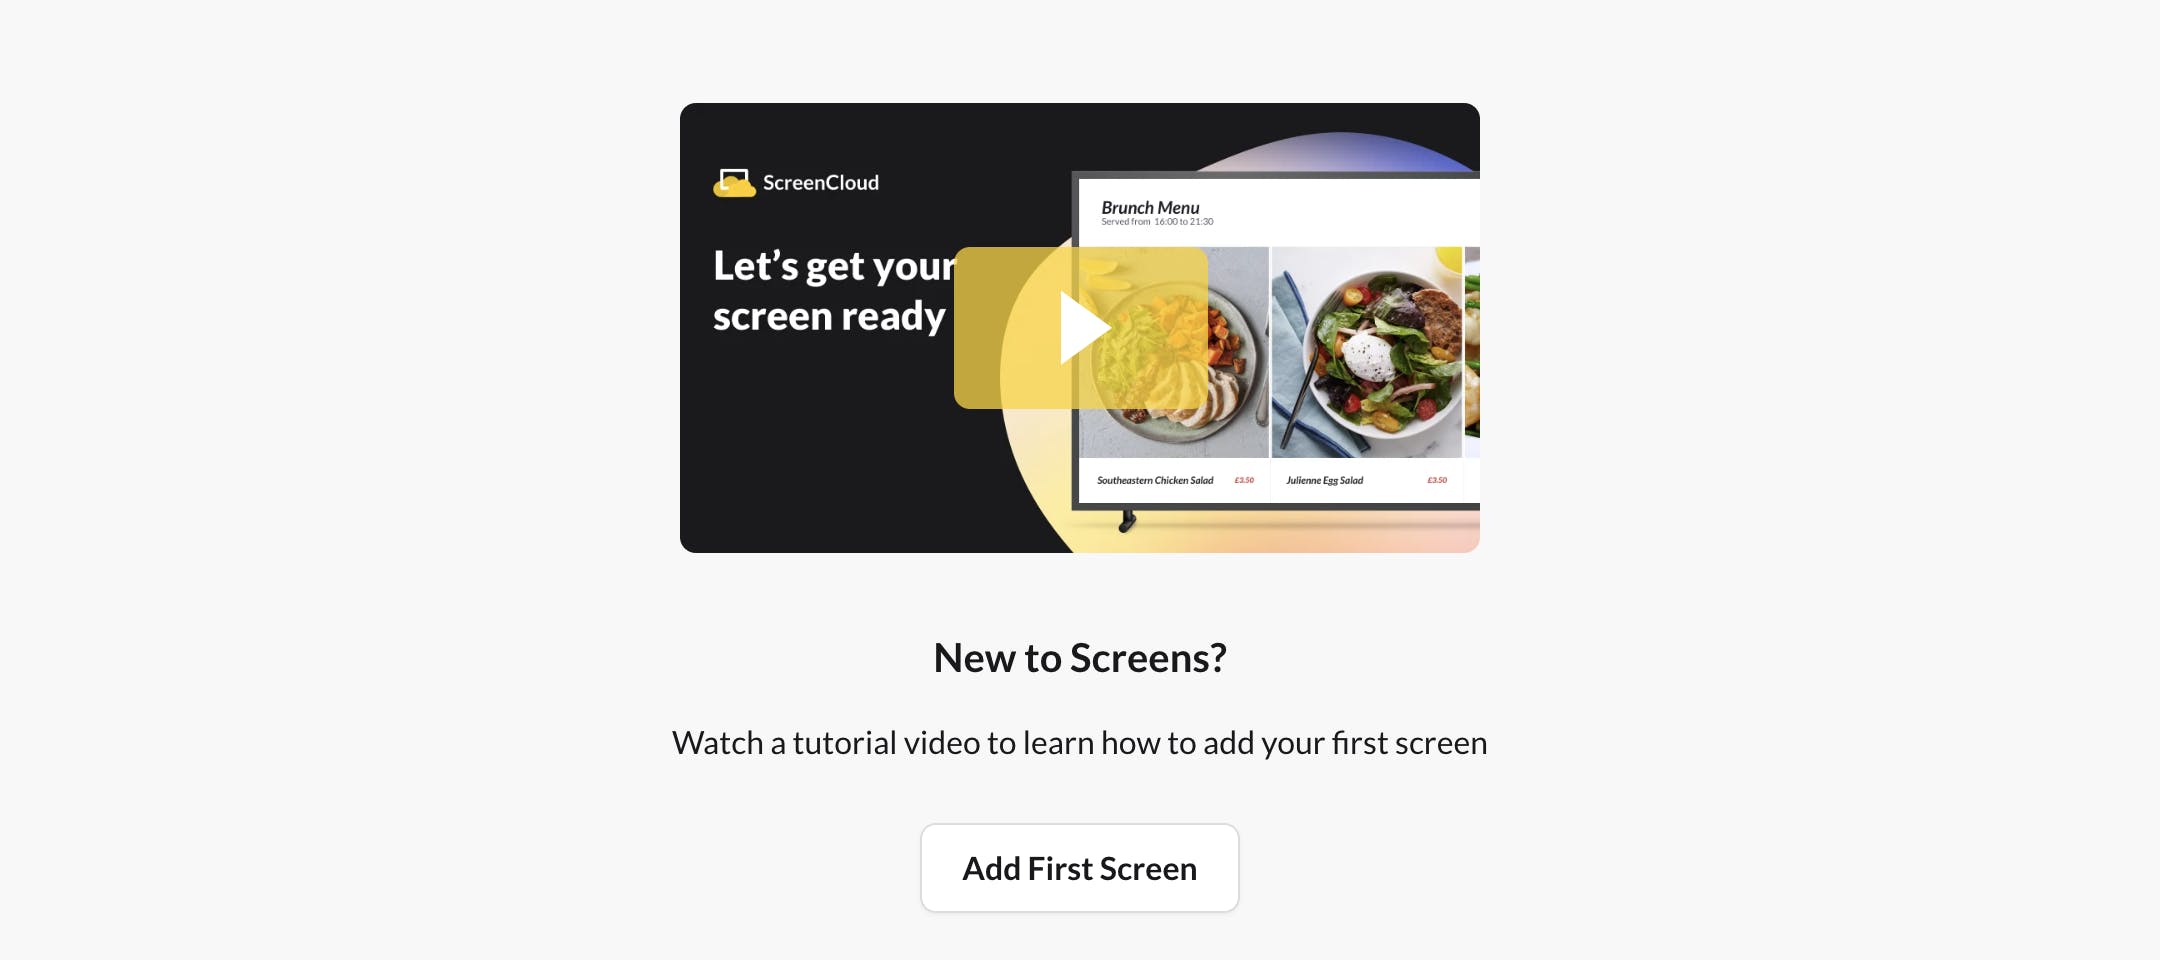 Digital Signage with Google's Chromecast - ScreenCloud